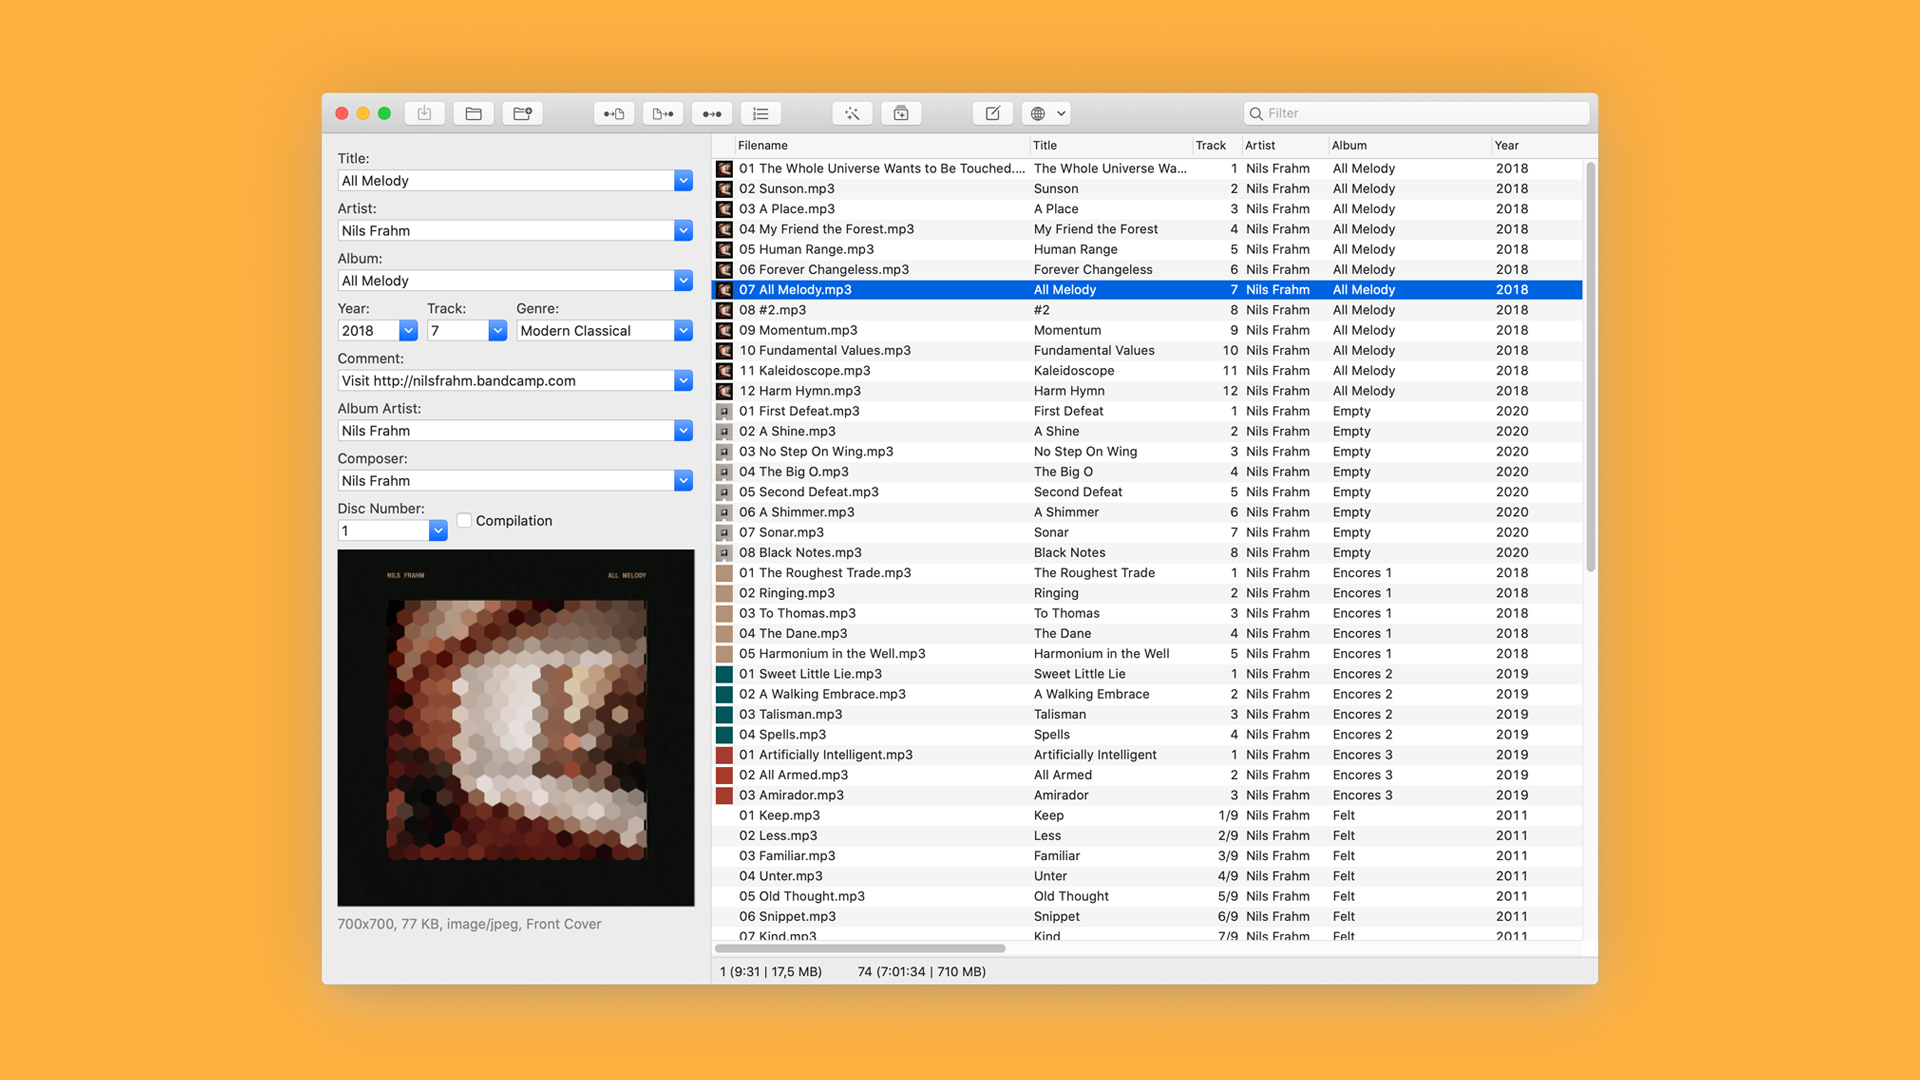 free dj software for mac 10.6.8